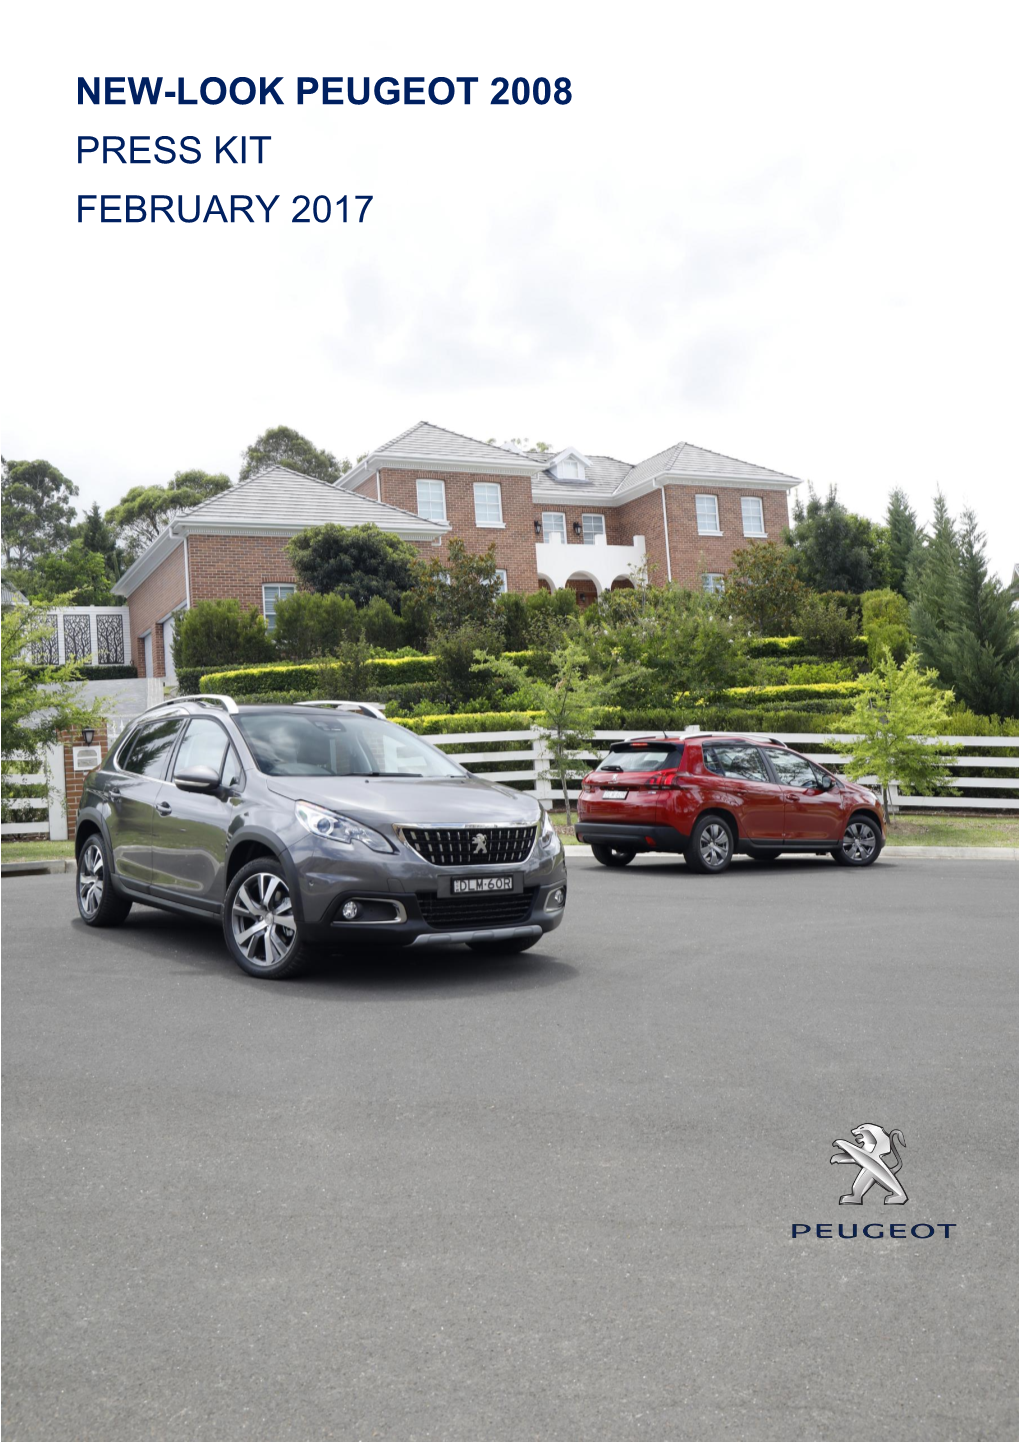 New-Look Peugeot 2008 Press Kit February 2017